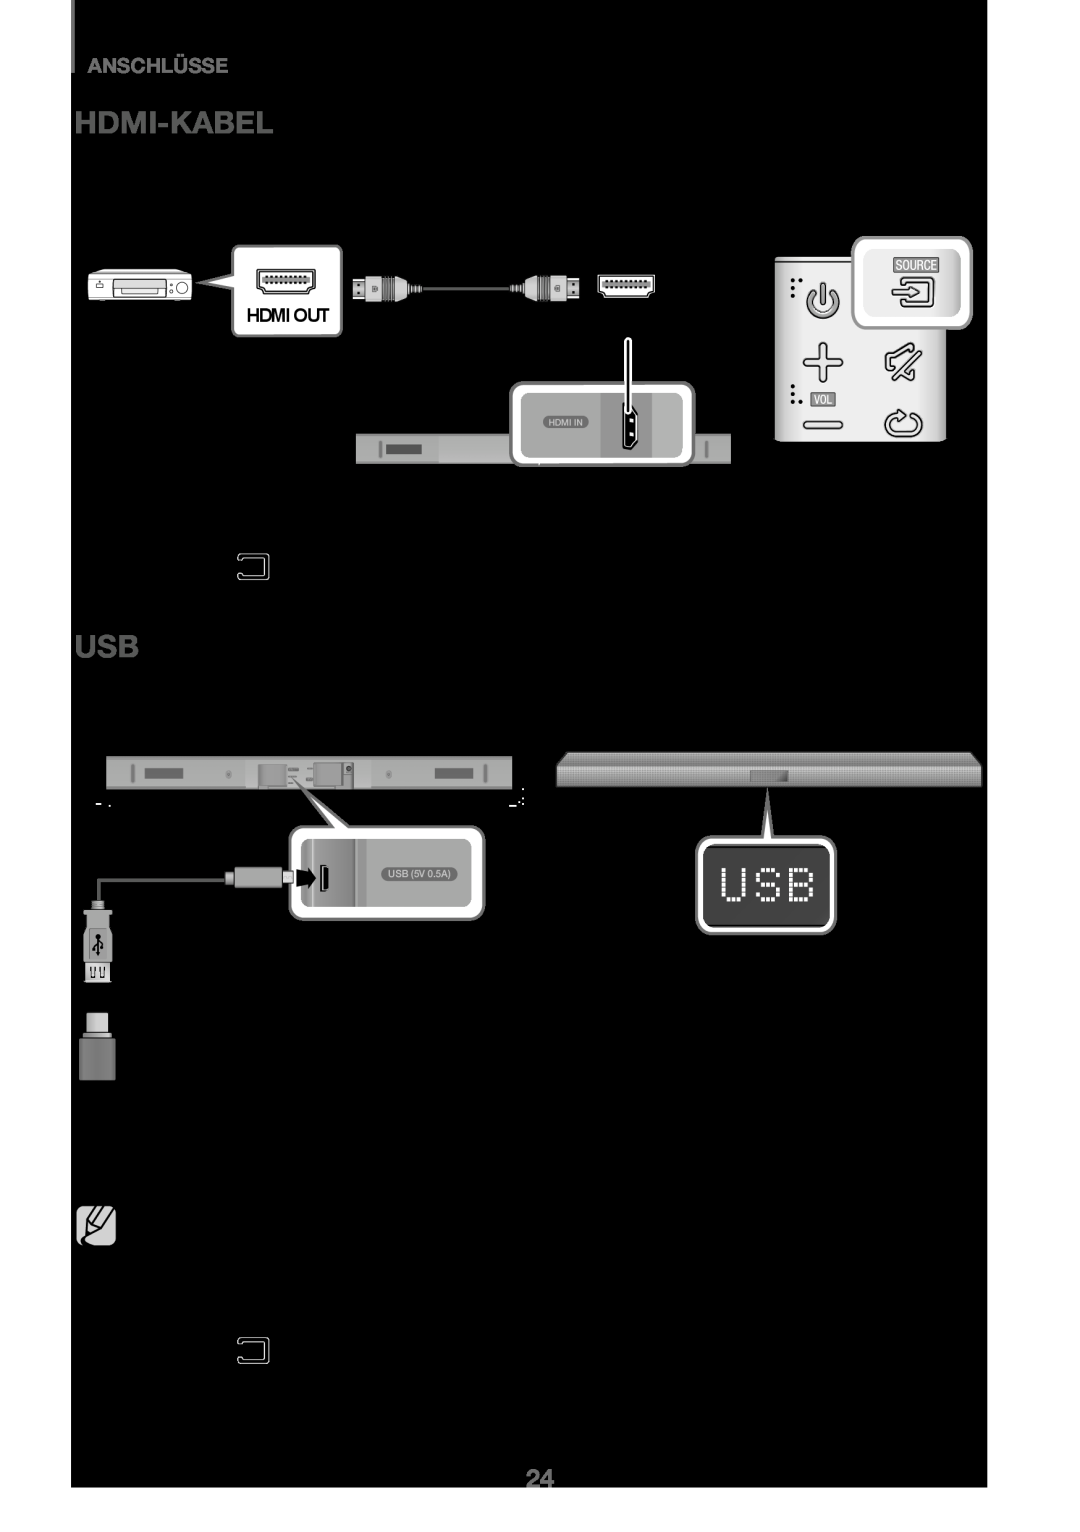 Samsung HW-J450/ZF, HW-K450/EN, HW-J450/EN manual Hdmi-Kabel, Anschlüsse, Digitalgeräte, mitgeliefert, Anzeige, USB-Anschluss 